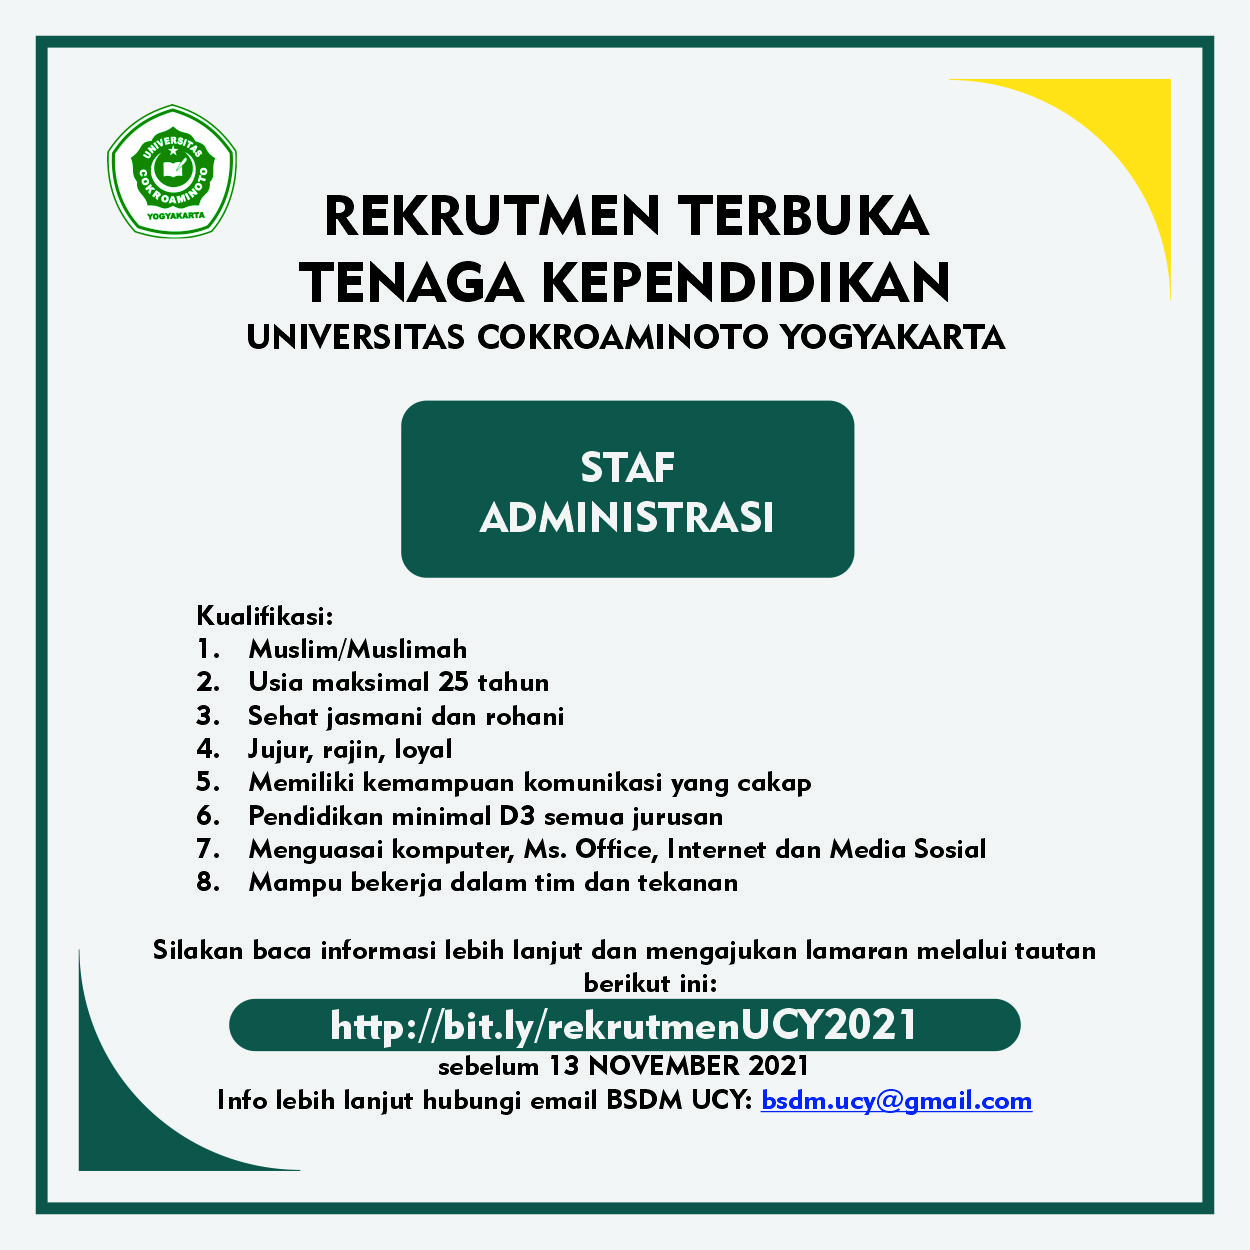 Rekrutmen Terbuka Tenaga Pendidikan Univeristas Cokroaminoto Yogyakarta